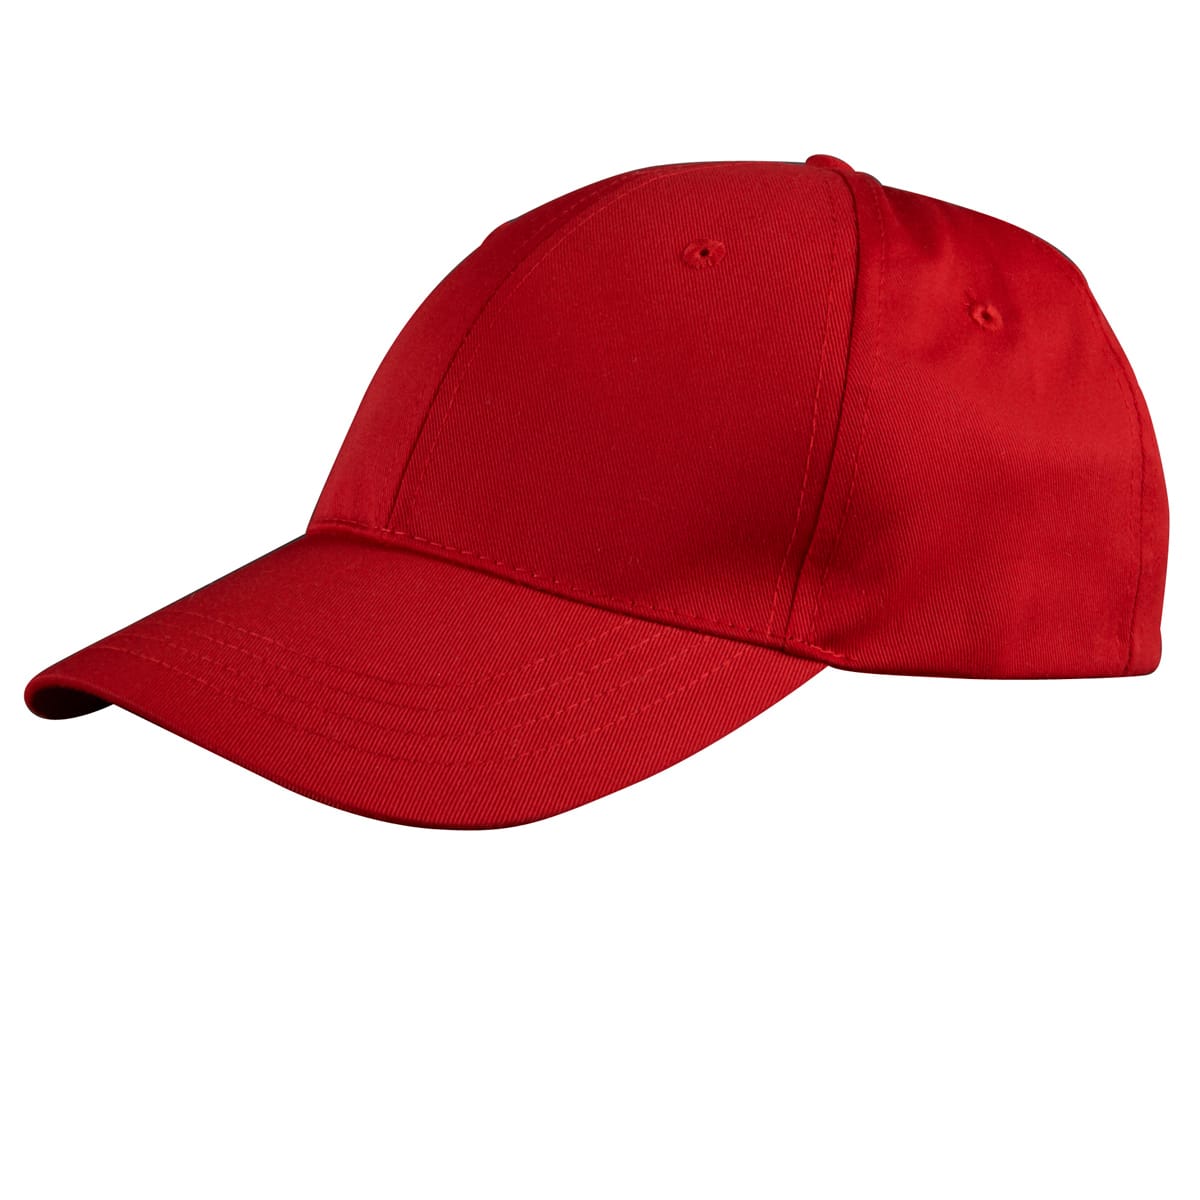 Plain Red Baseball Cap